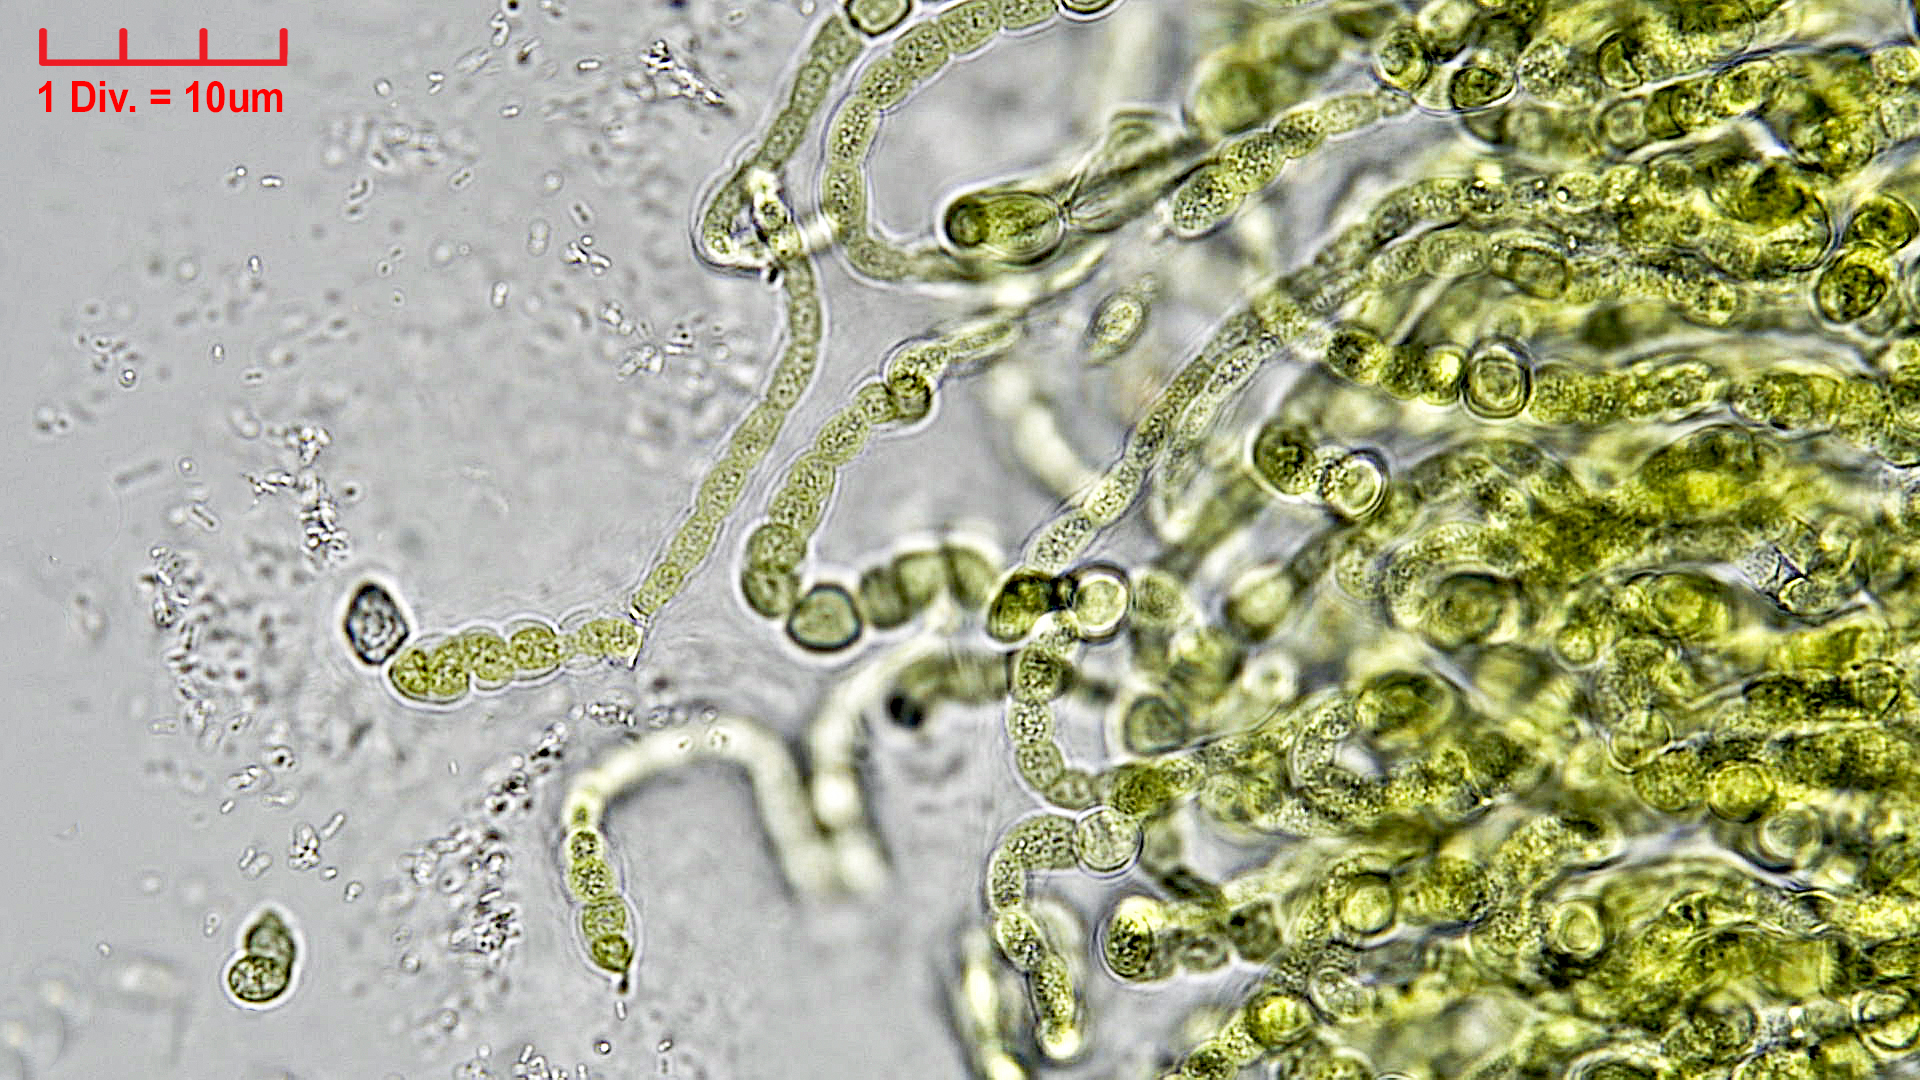 ././Cyanobacteria/Nostocales/Symphyonemataceae/Brachytrichia/sp/brachytrichia-4.jpg